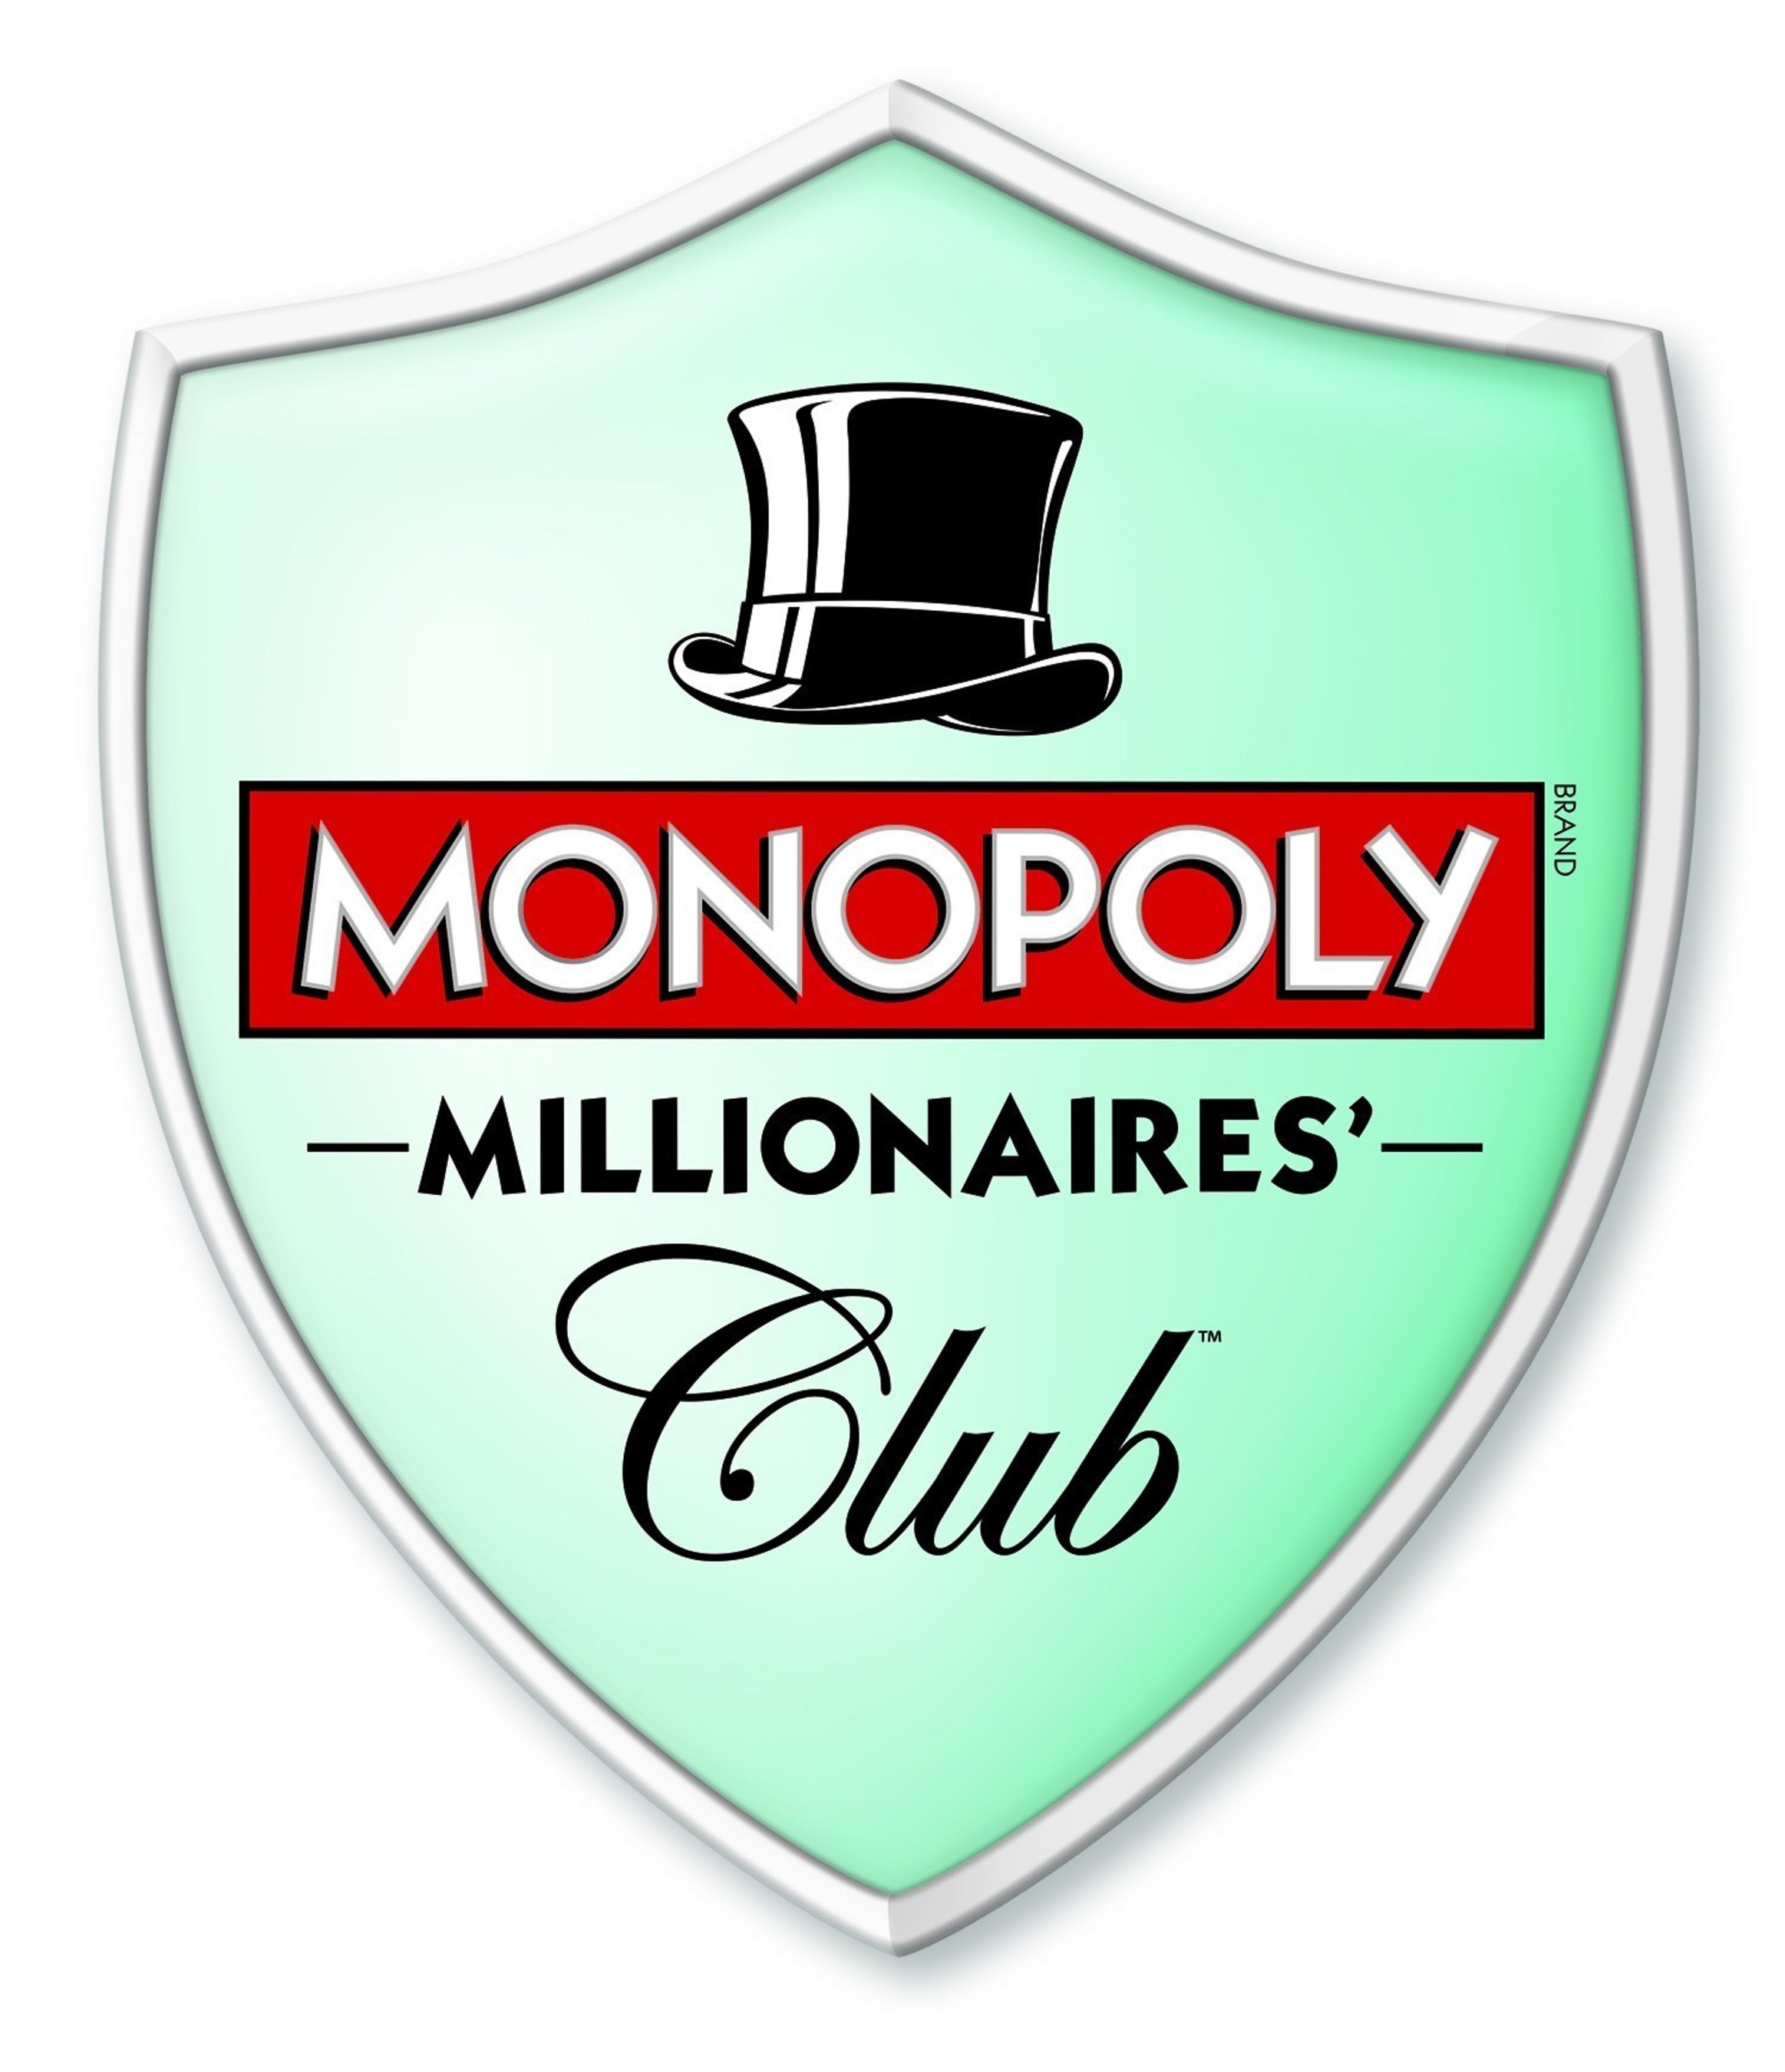 MONOPOLY MILLIONAIRES' CLUB(TM)